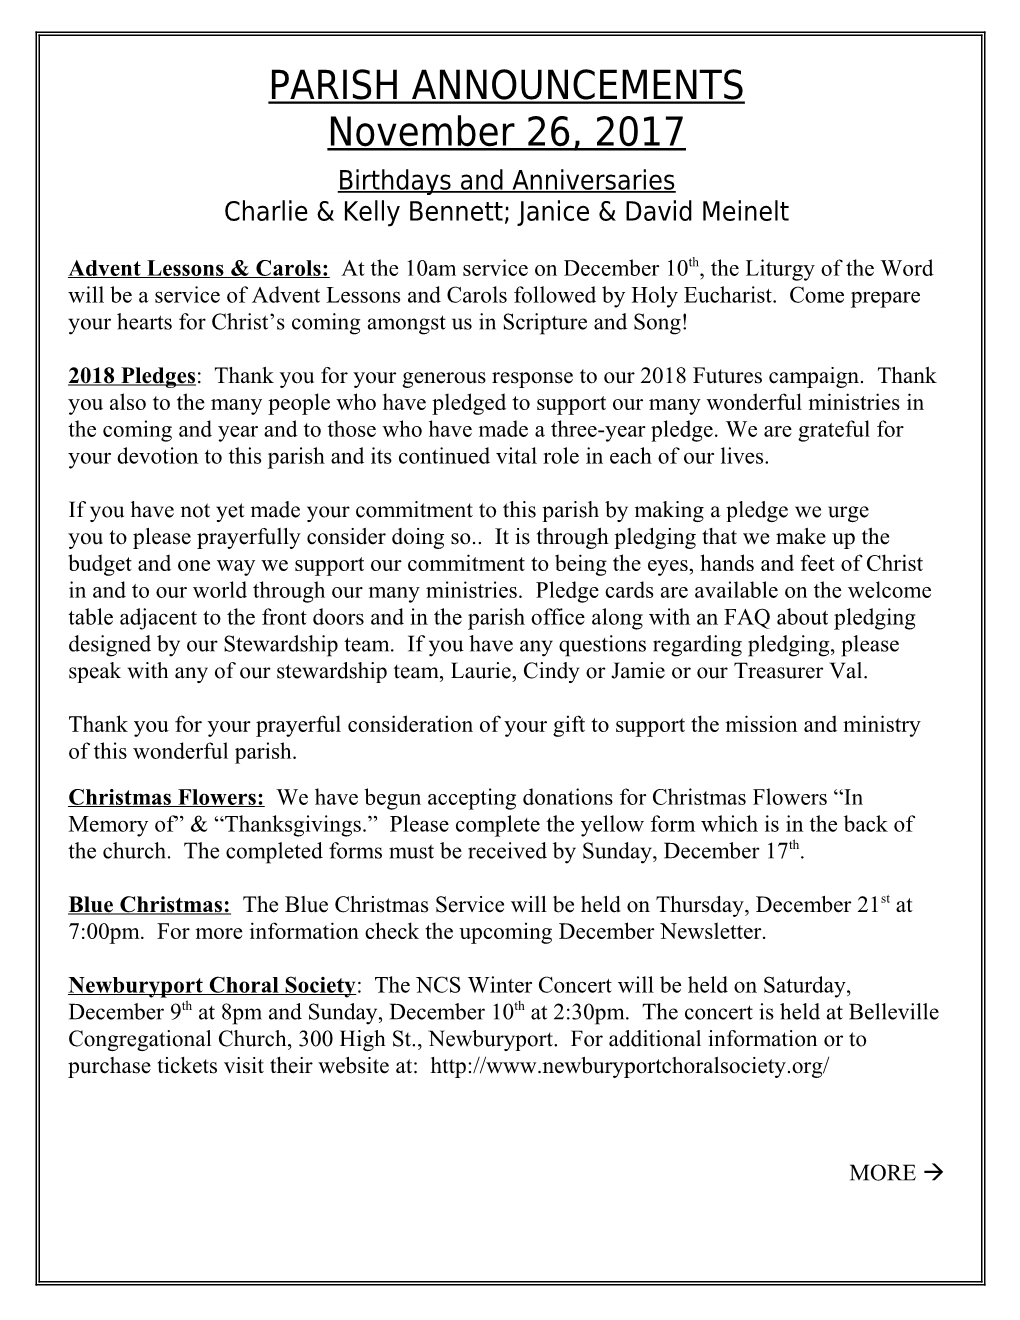 Parish Announcements